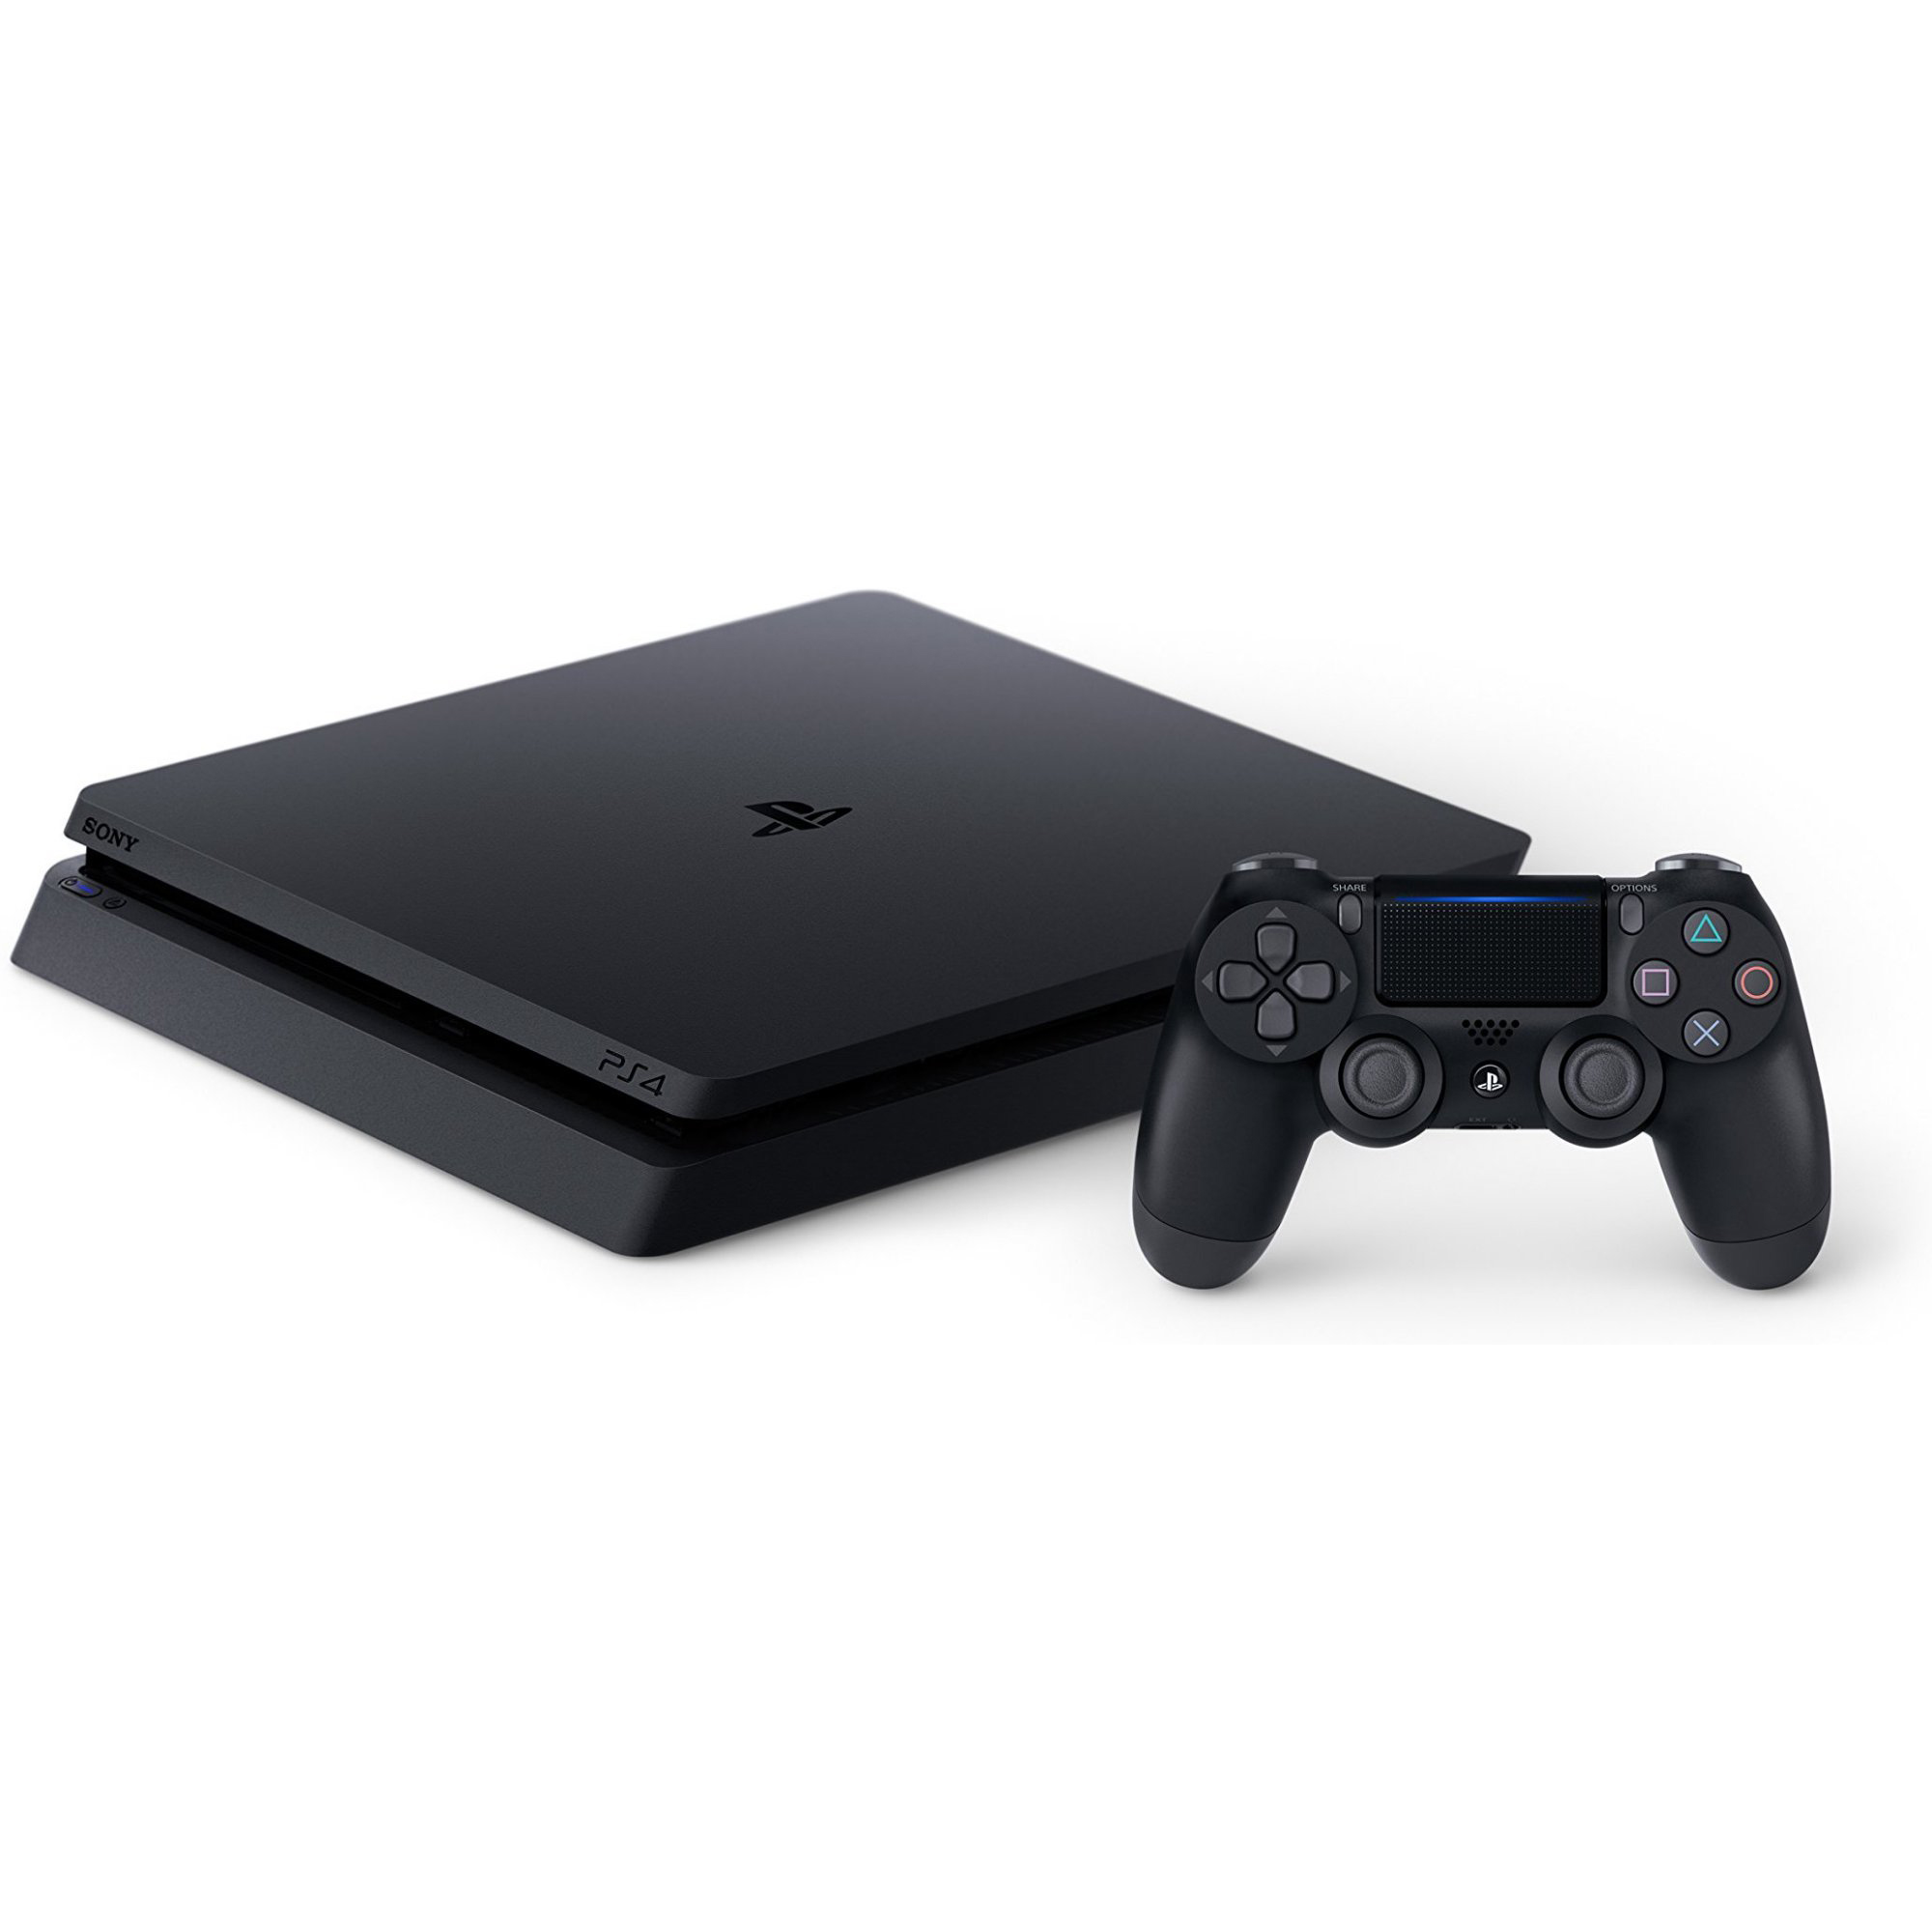 Sony PlayStation 4 Slim 1TB Gaming Console, Black, CUH-2115B - image 3 of 9